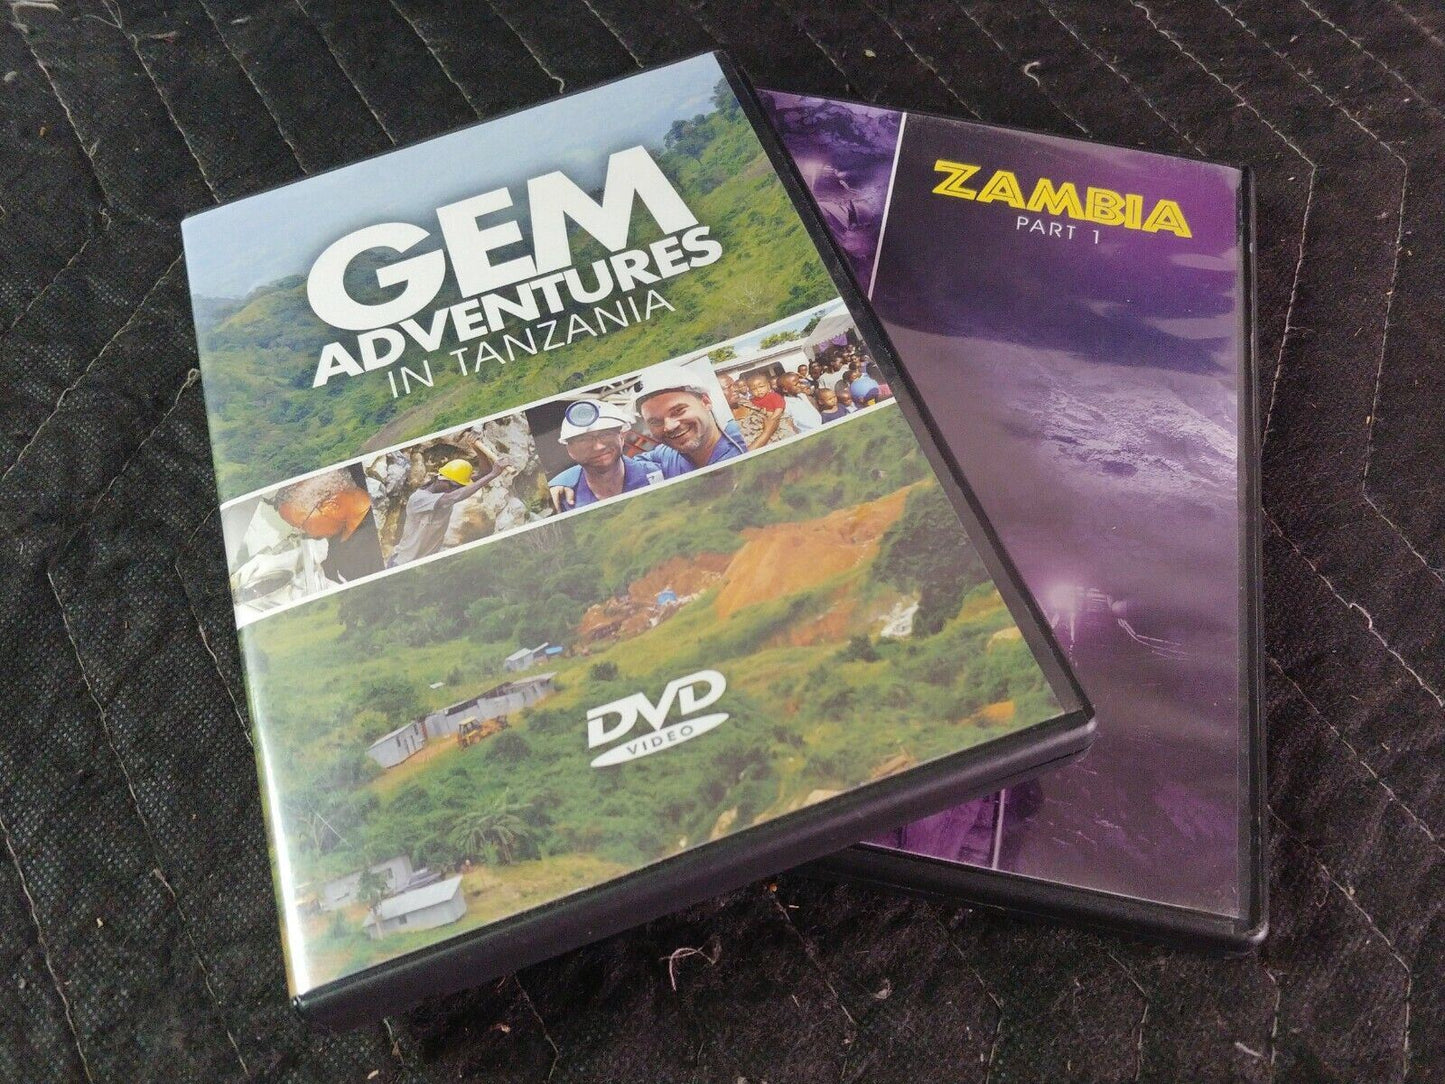 Gem Adventures in Tanzania & Zambia Part 1 - the genuine gemstone company